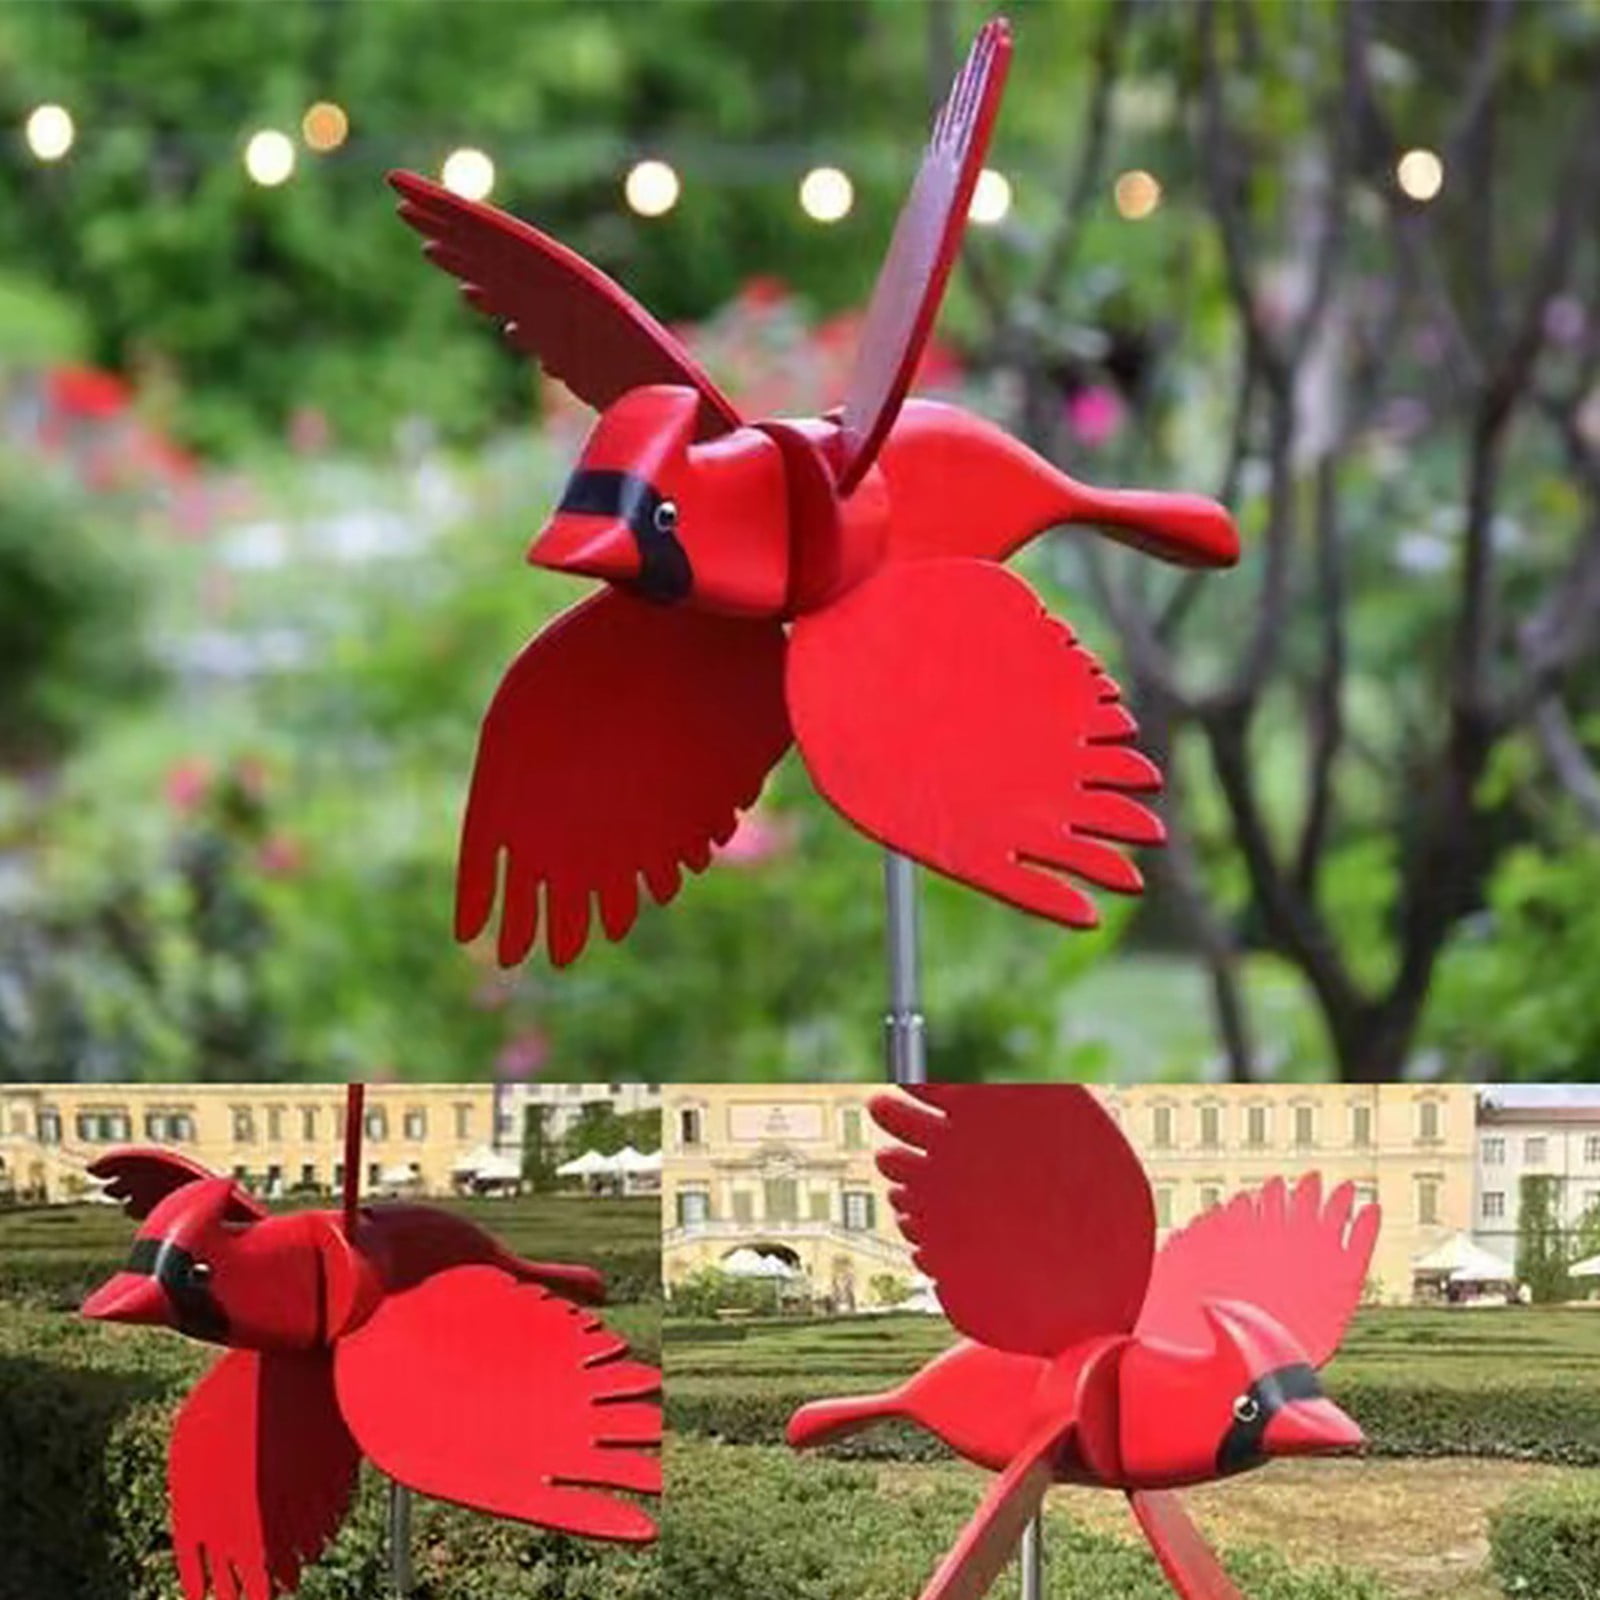 Wooden Whirligig Asuka Serie Windmühle Whirly Parrots Decor Garden USA U1Z1 